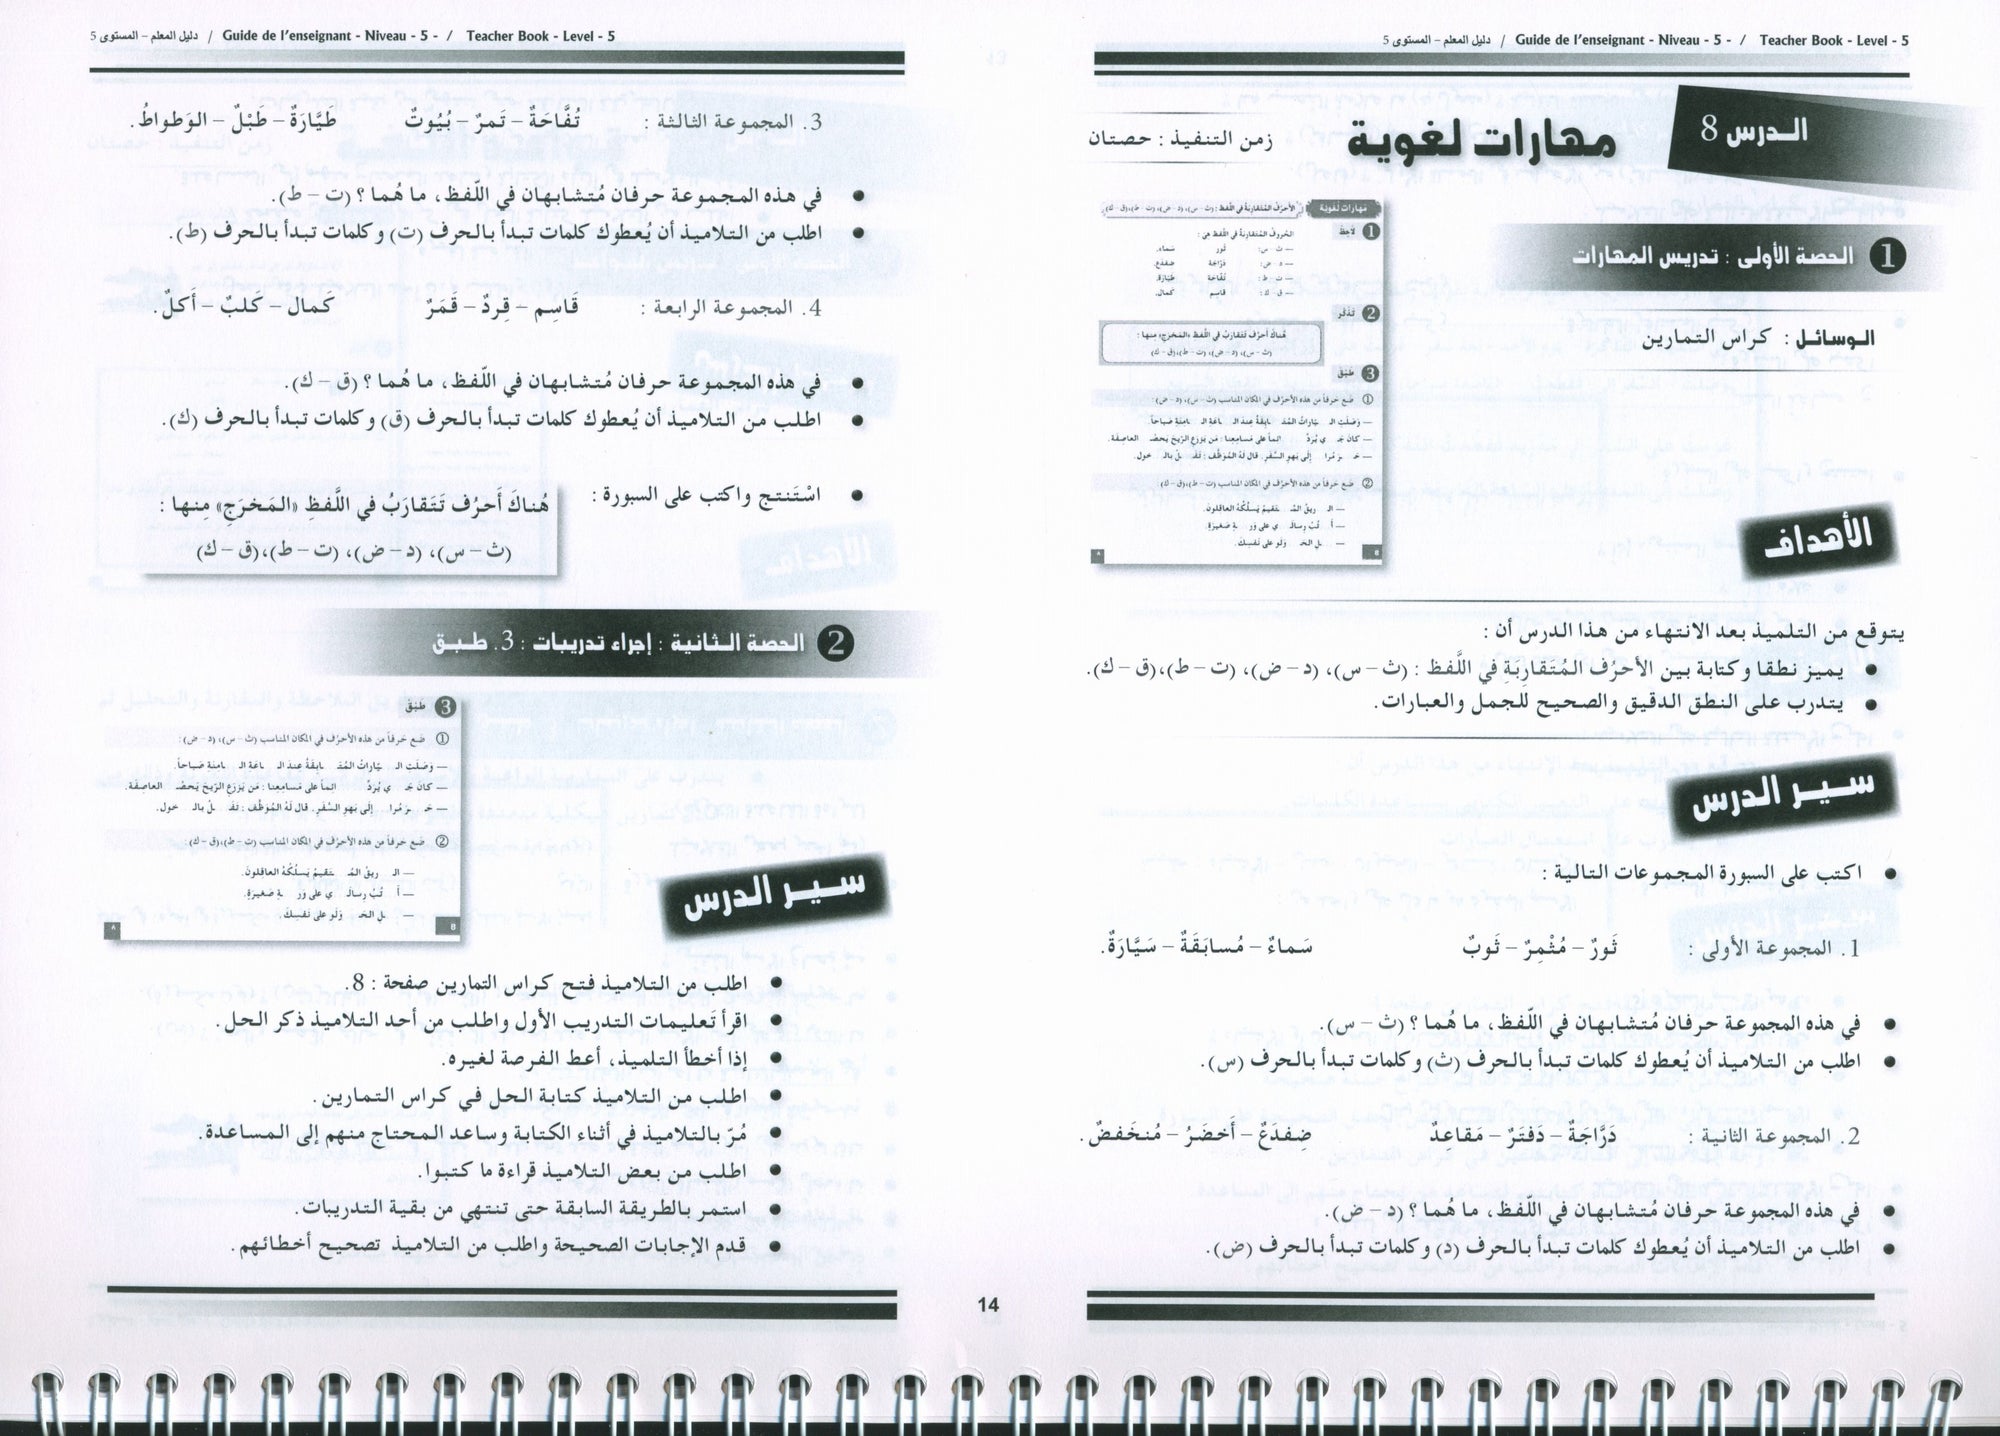 I Love the Arabic Language Teacher Book Level 5